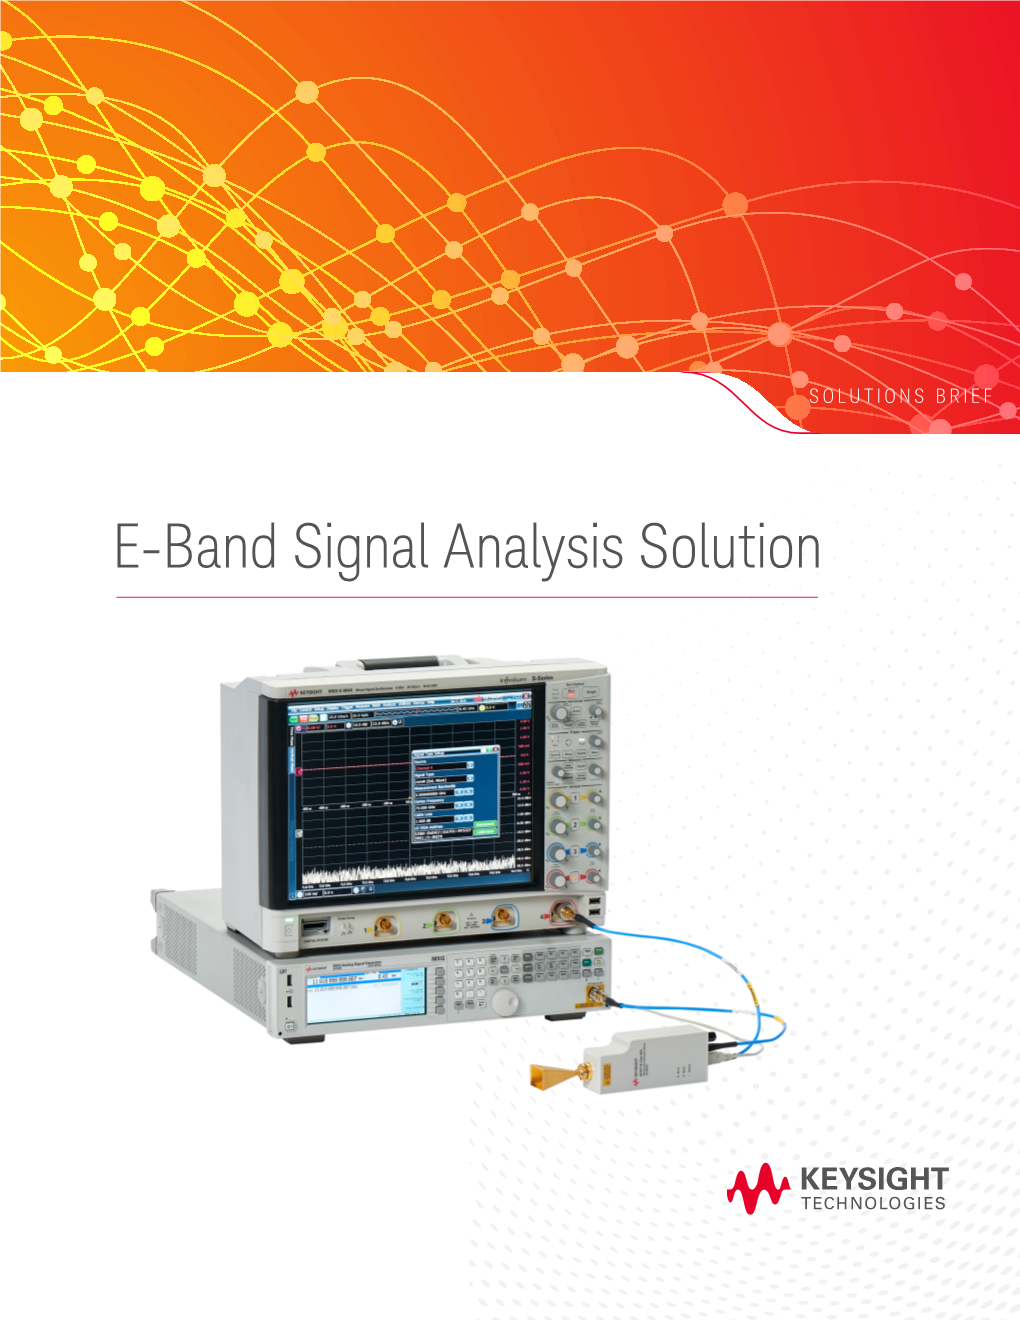 E-Band Signal Analysis Solution the Keysight Technologies, Inc